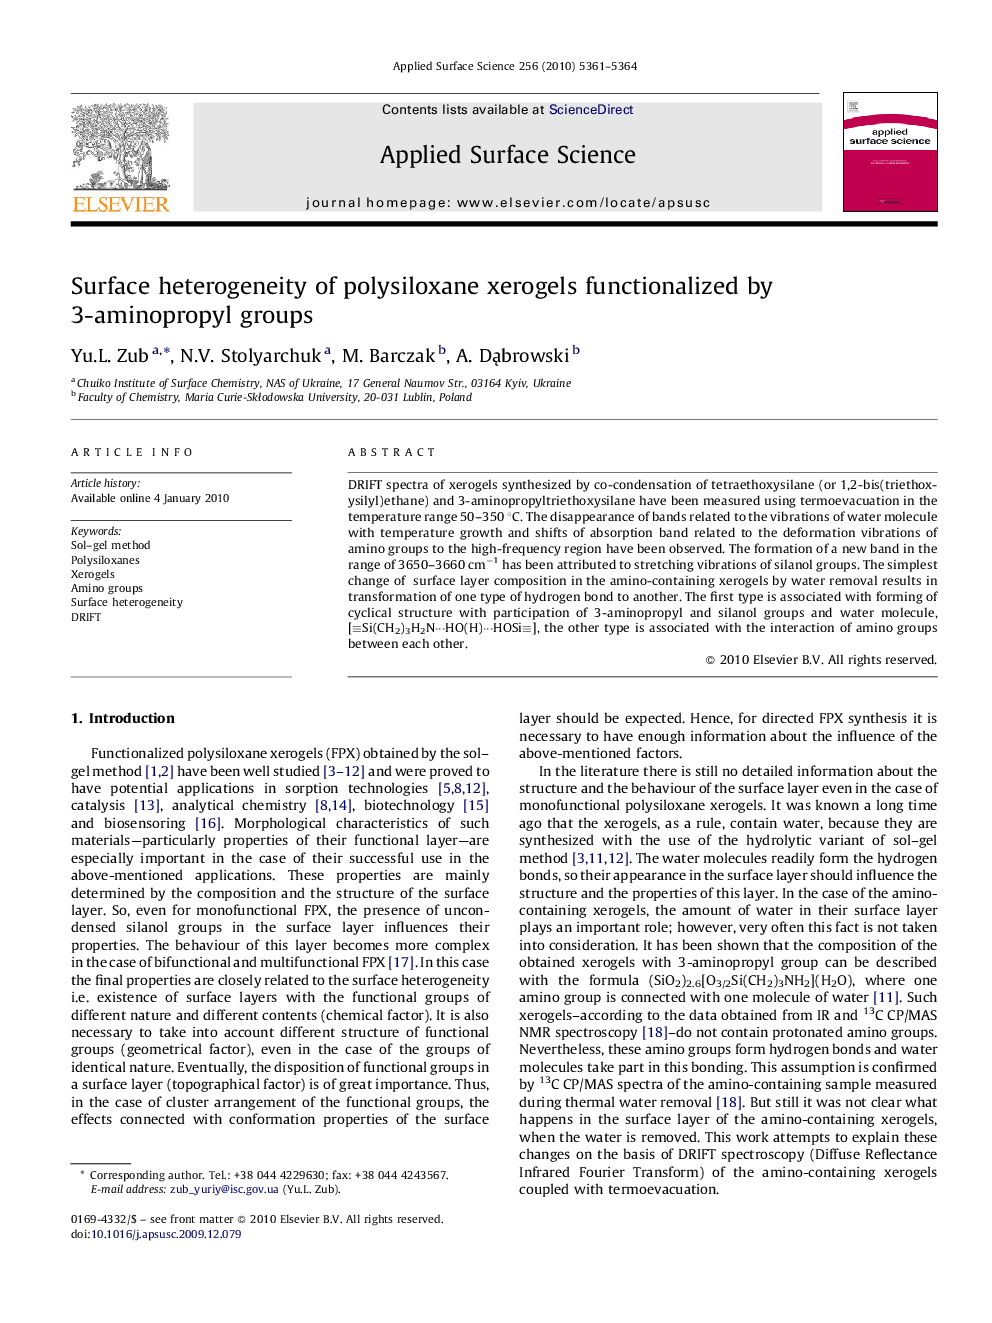 Surface heterogeneity of polysiloxane xerogels functionalized by 3-aminopropyl groups